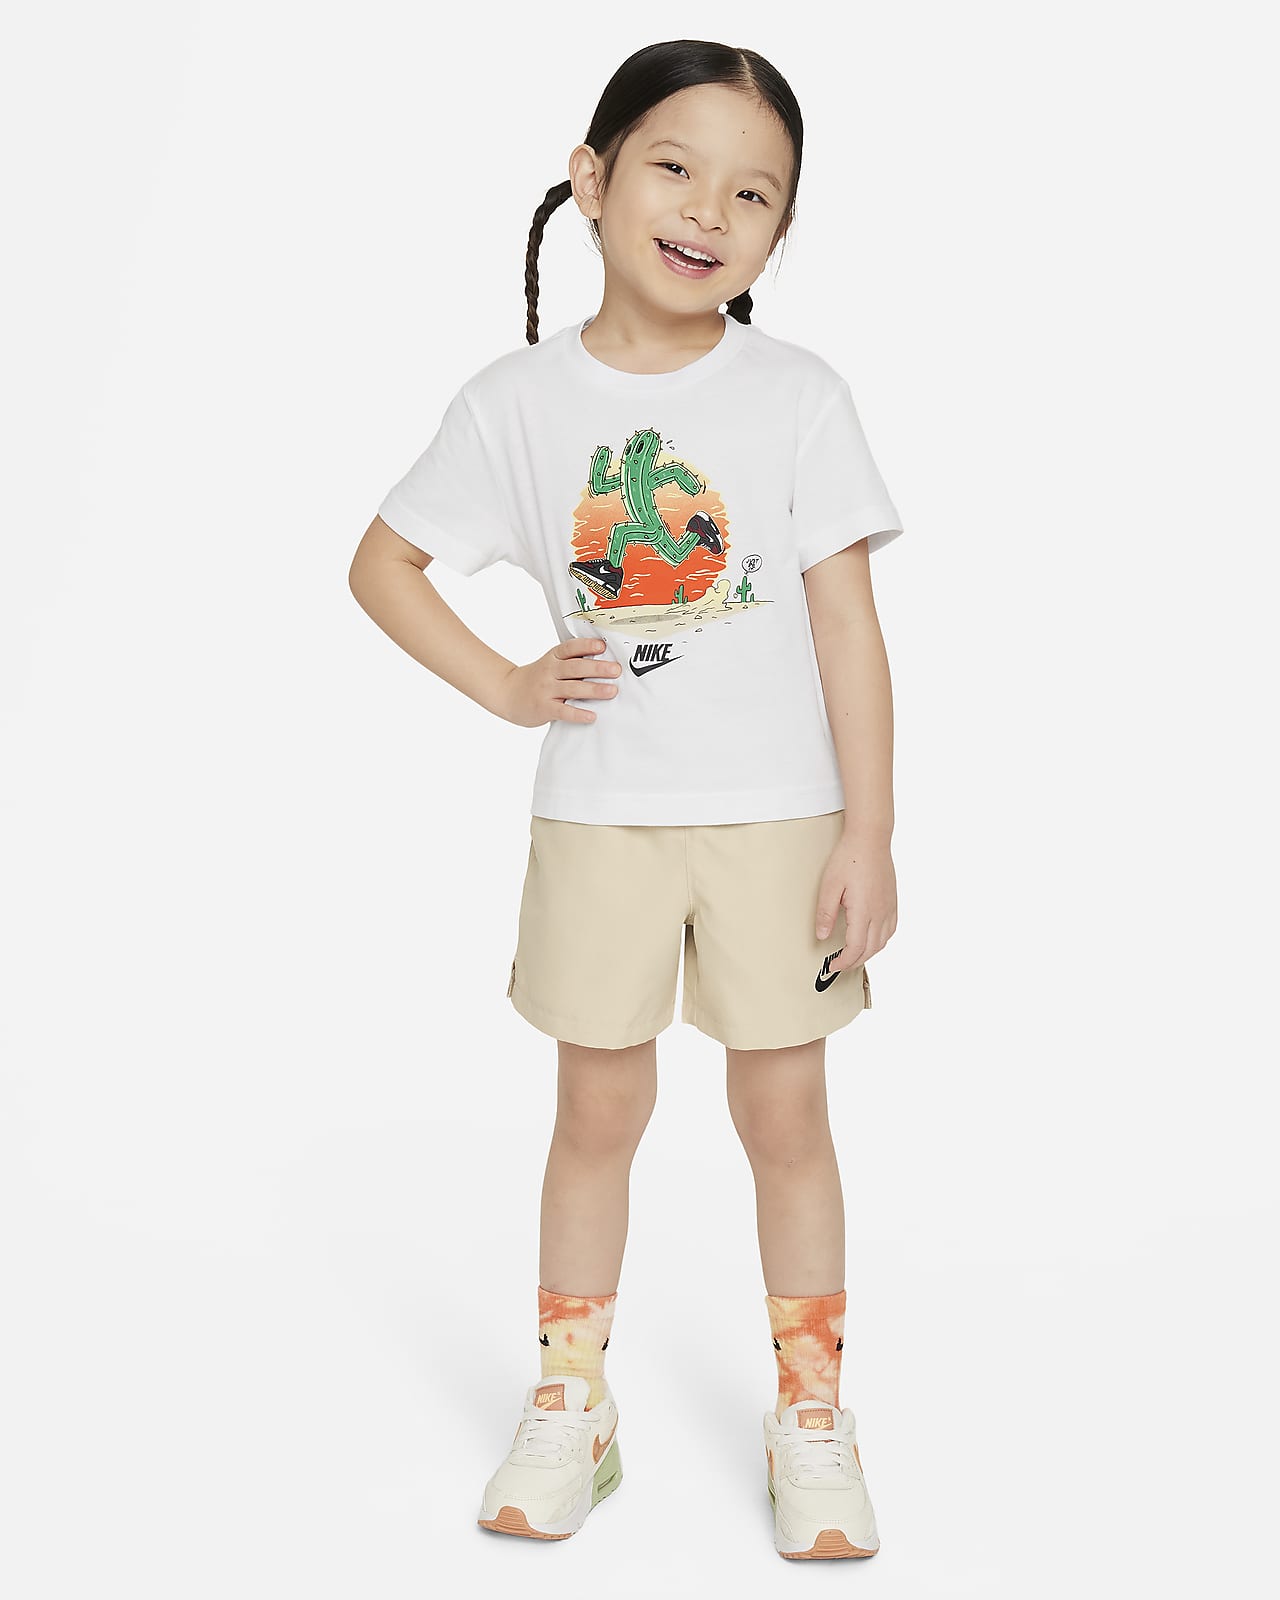 Nike Grow For It Toddler Shorts Set